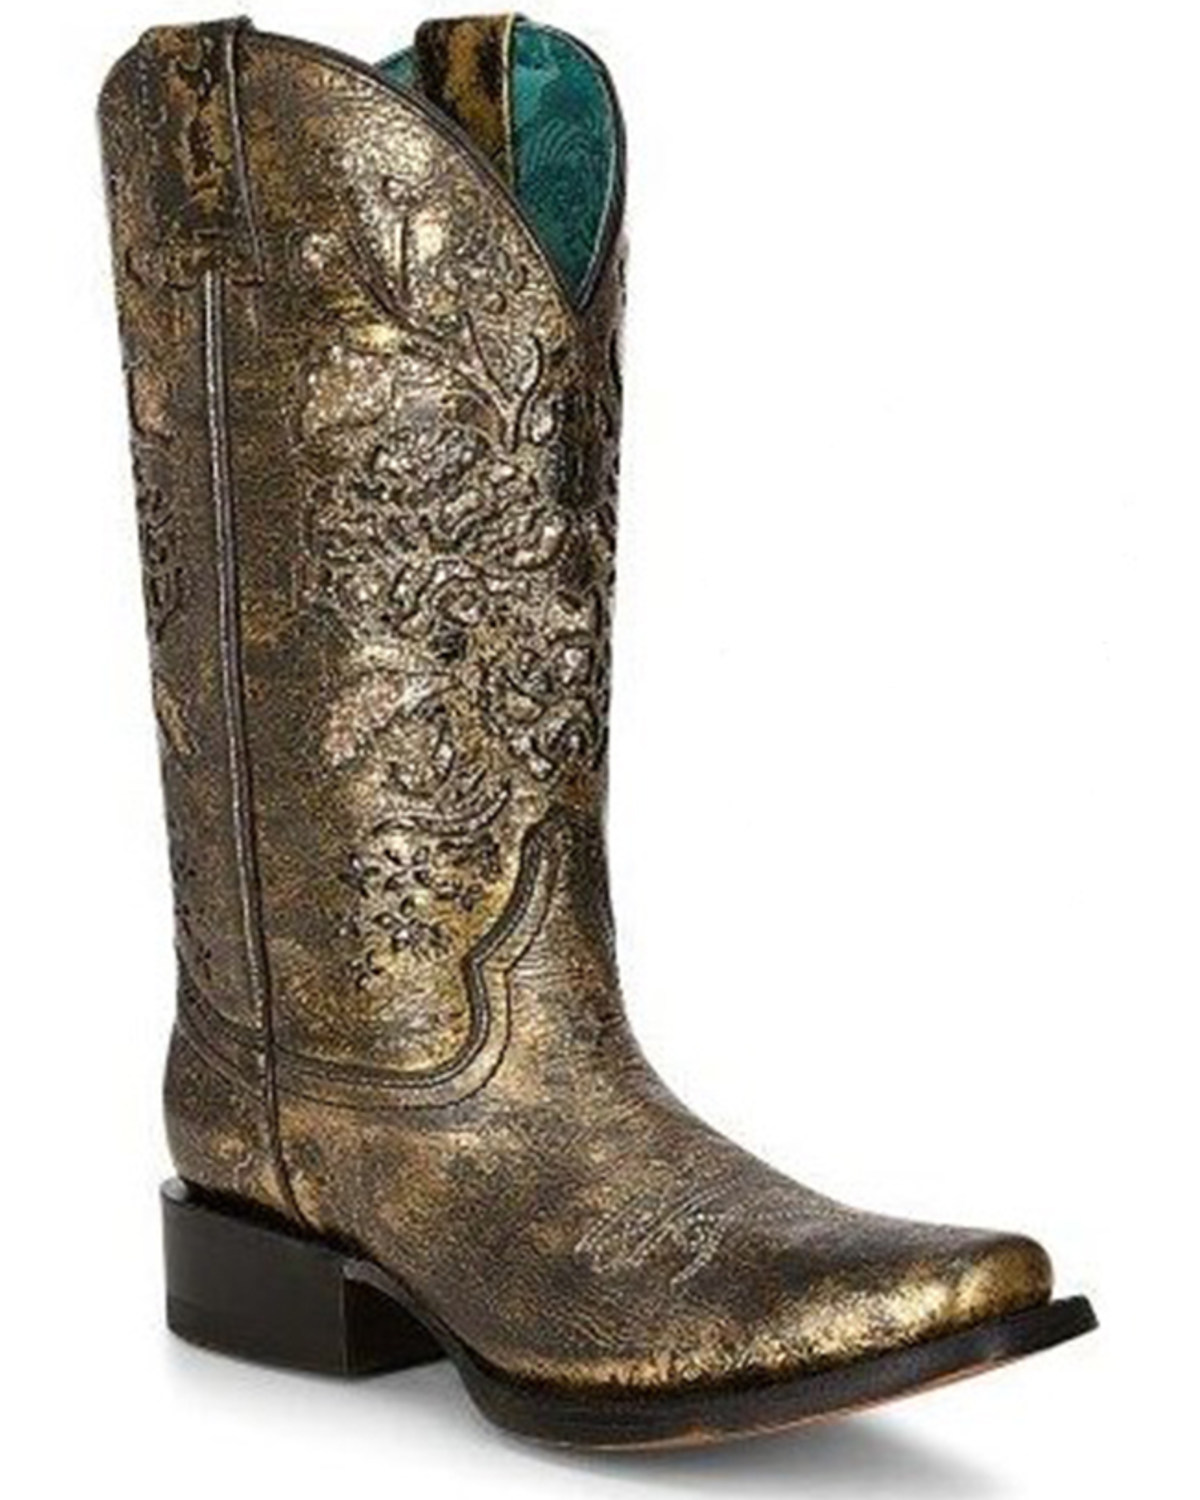 Corral Women's Metallic Western Boots - Snip Toe